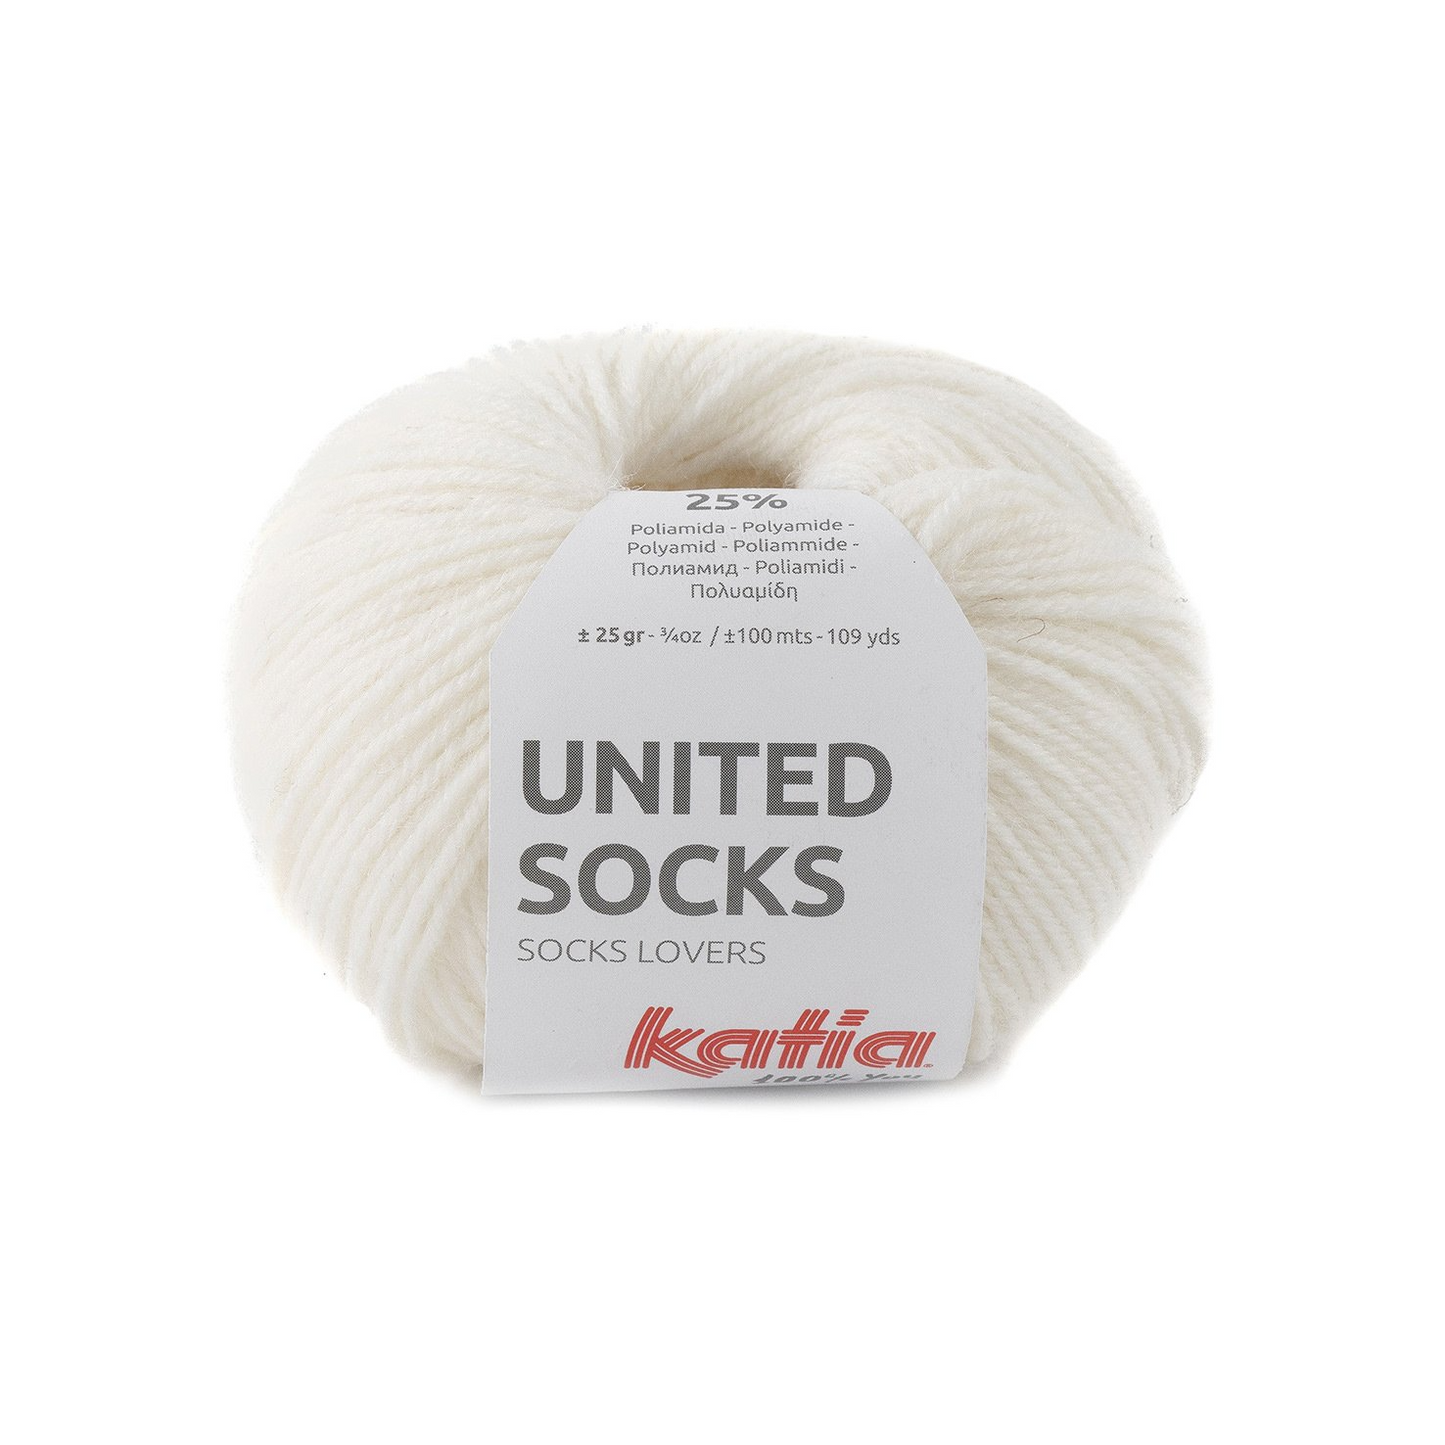 United Socks de Katia